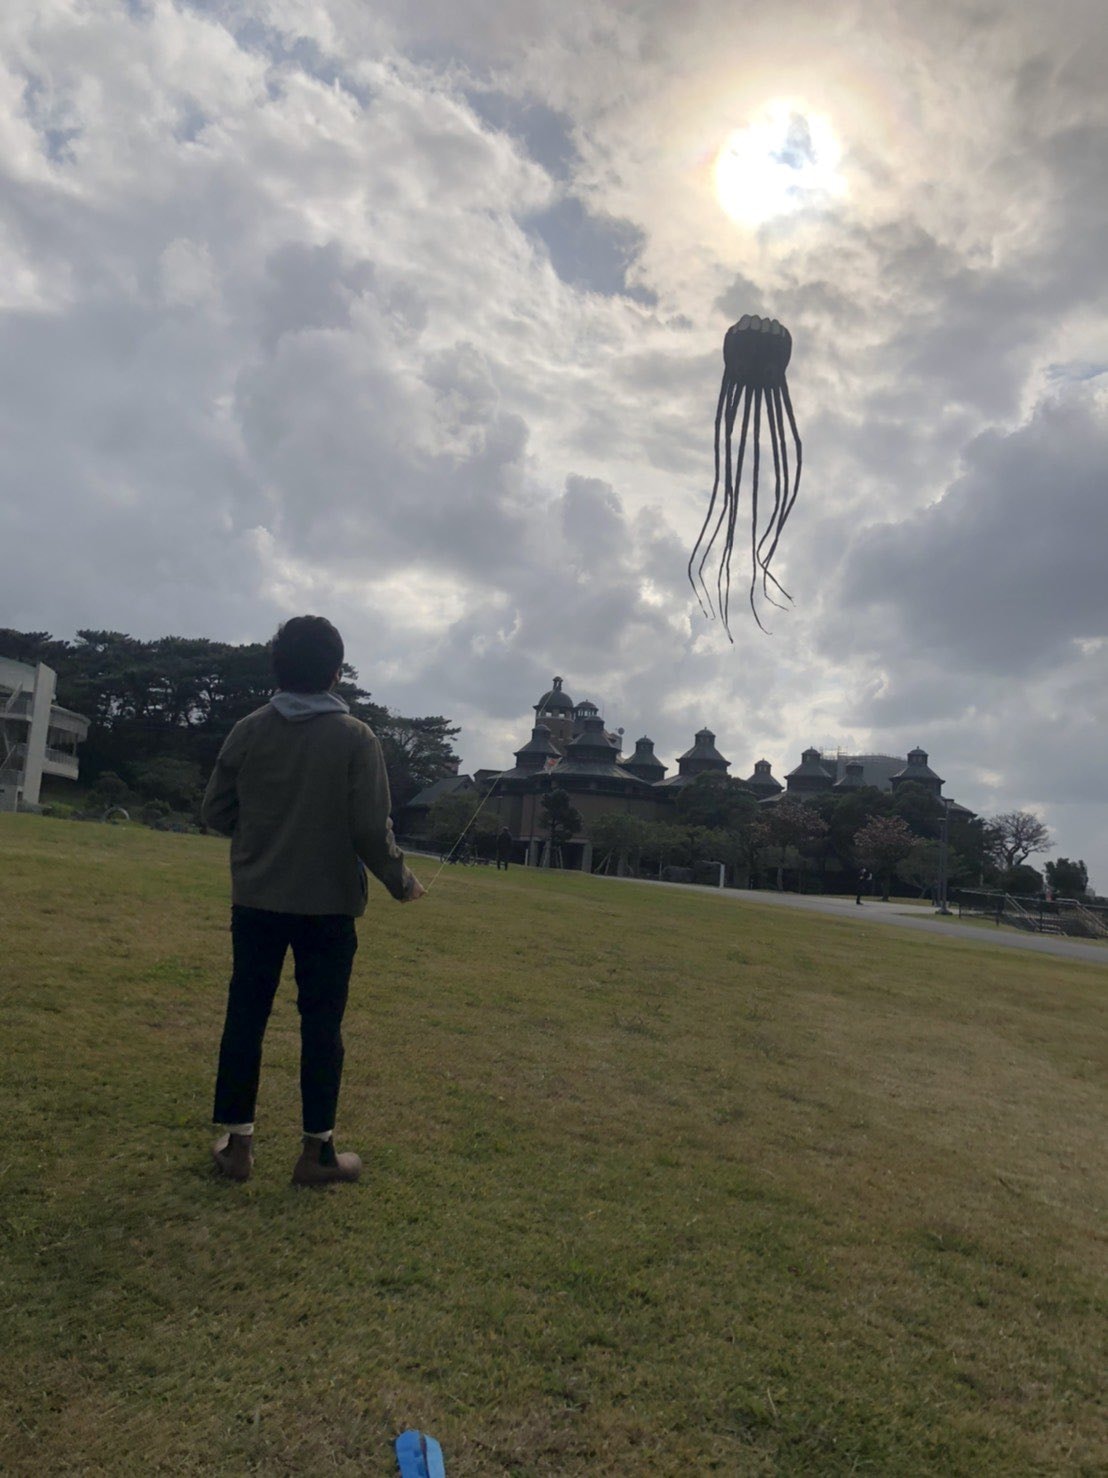 octopus kite - kite mid-air